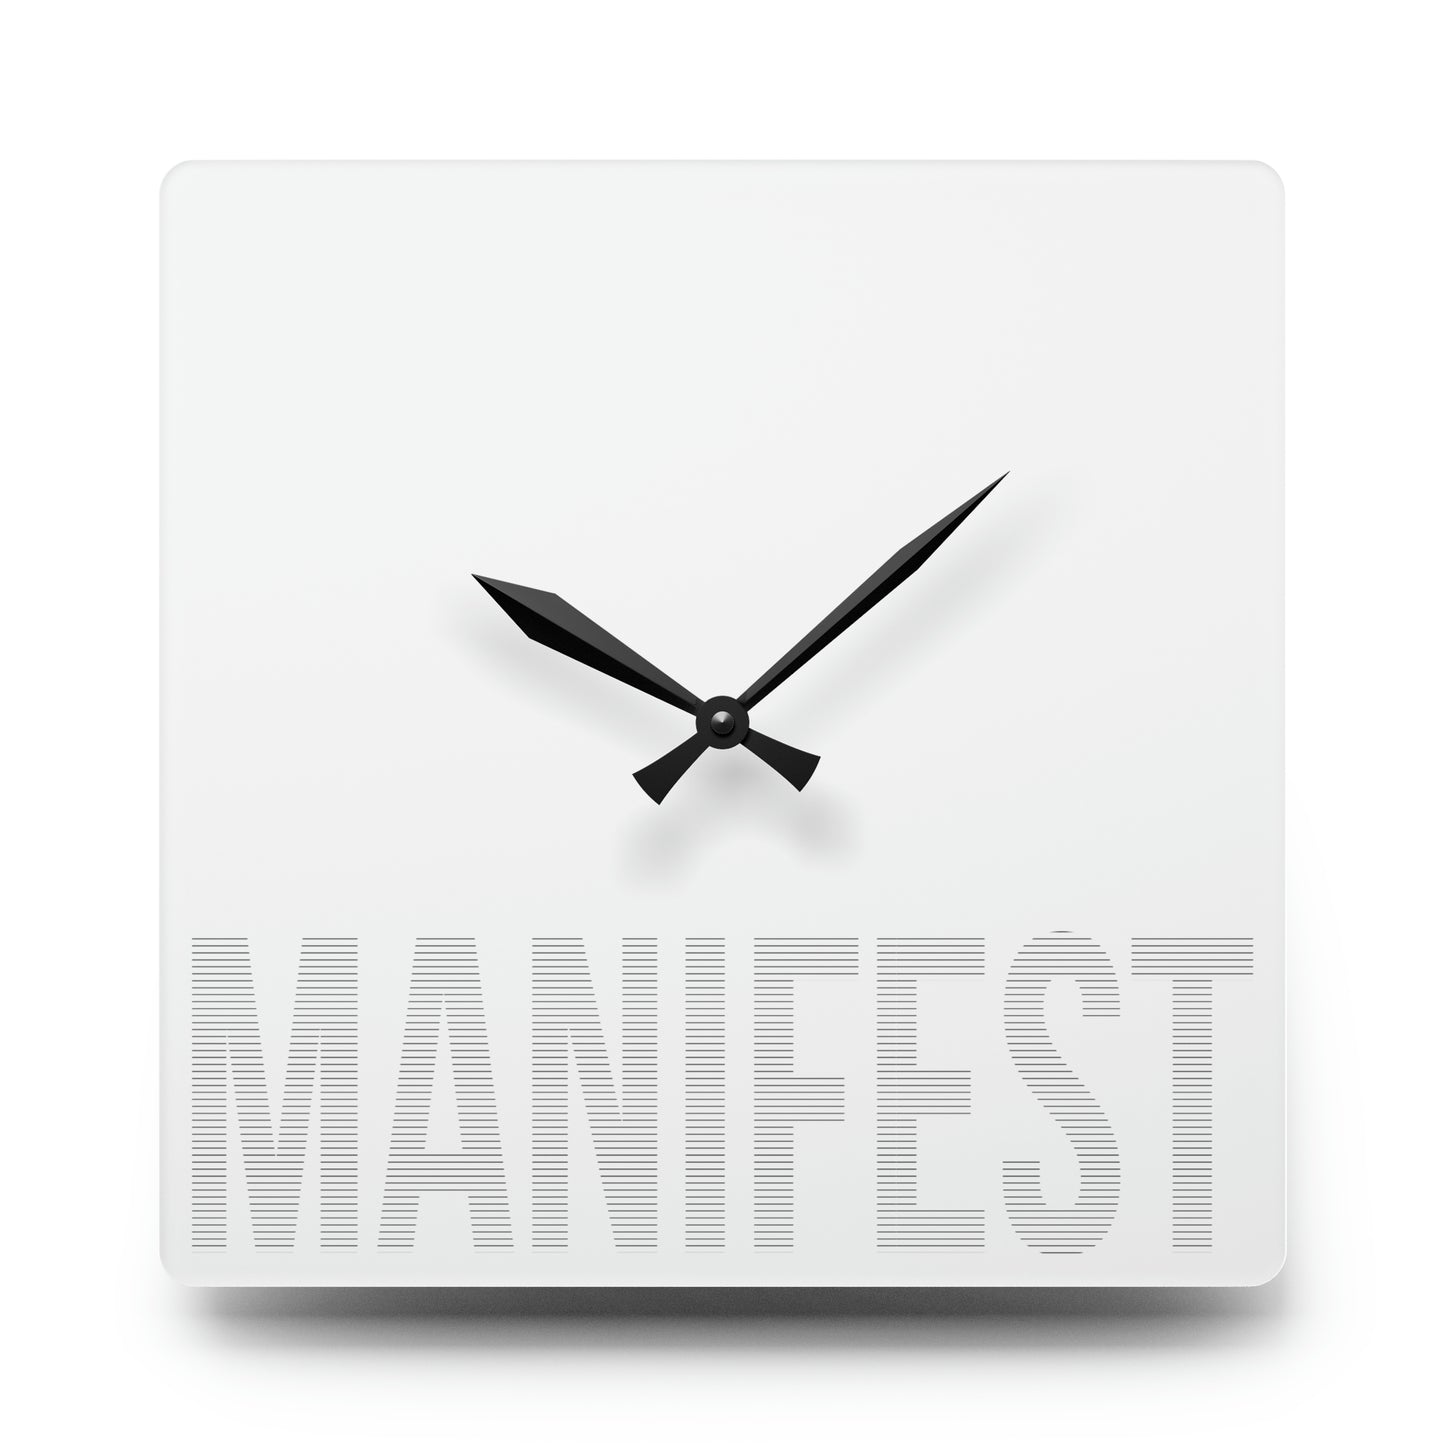 "Manifest" Minimlist Look Acrylic Wall Clock